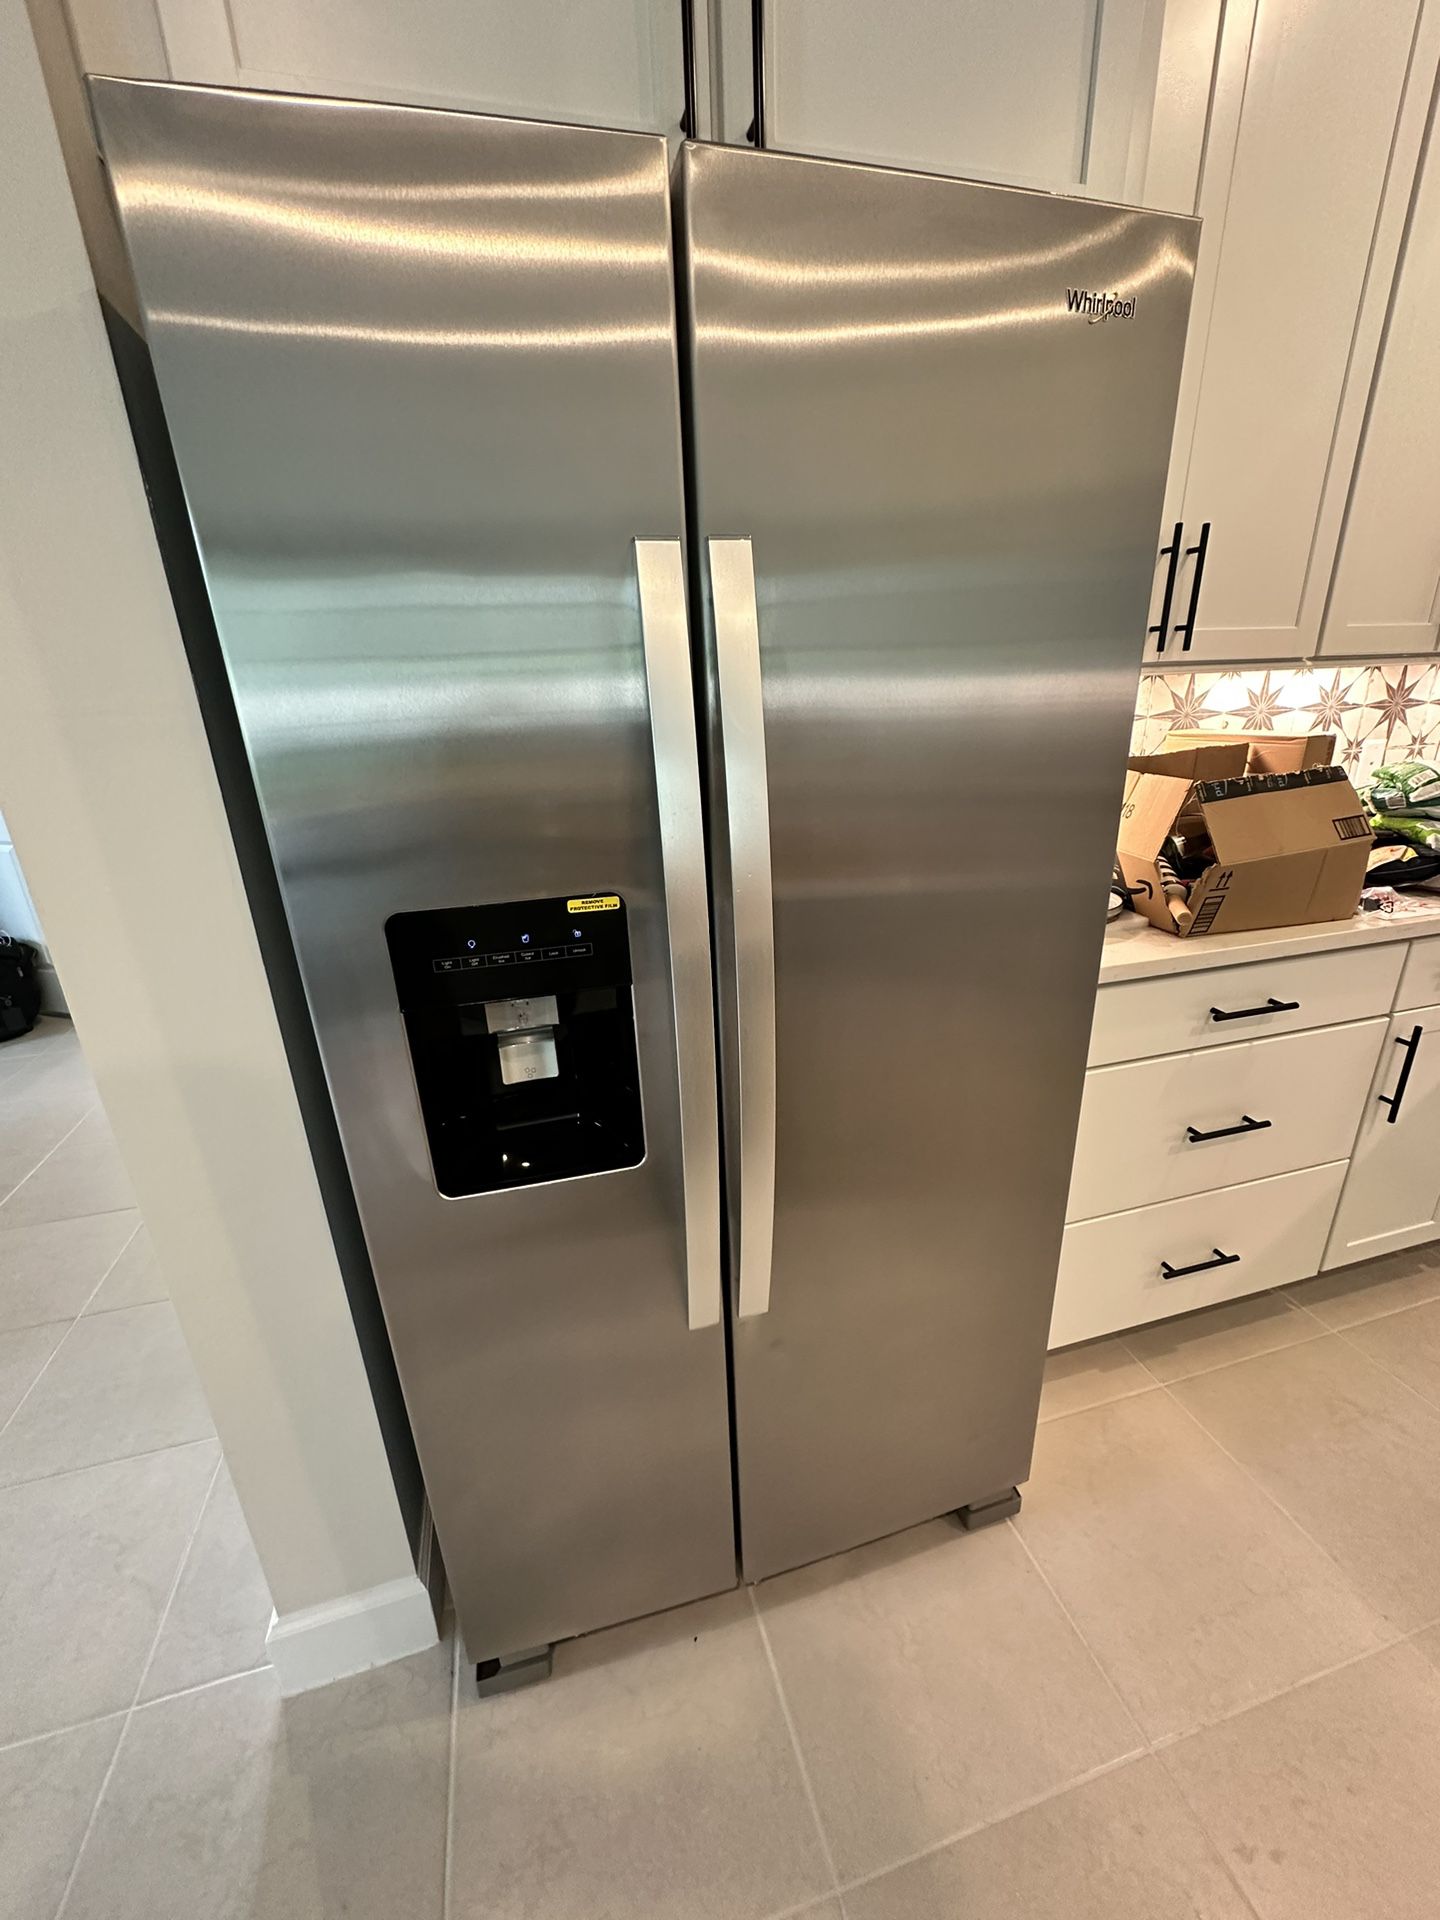 Brand new whirlpool Refrigerator/Freezer